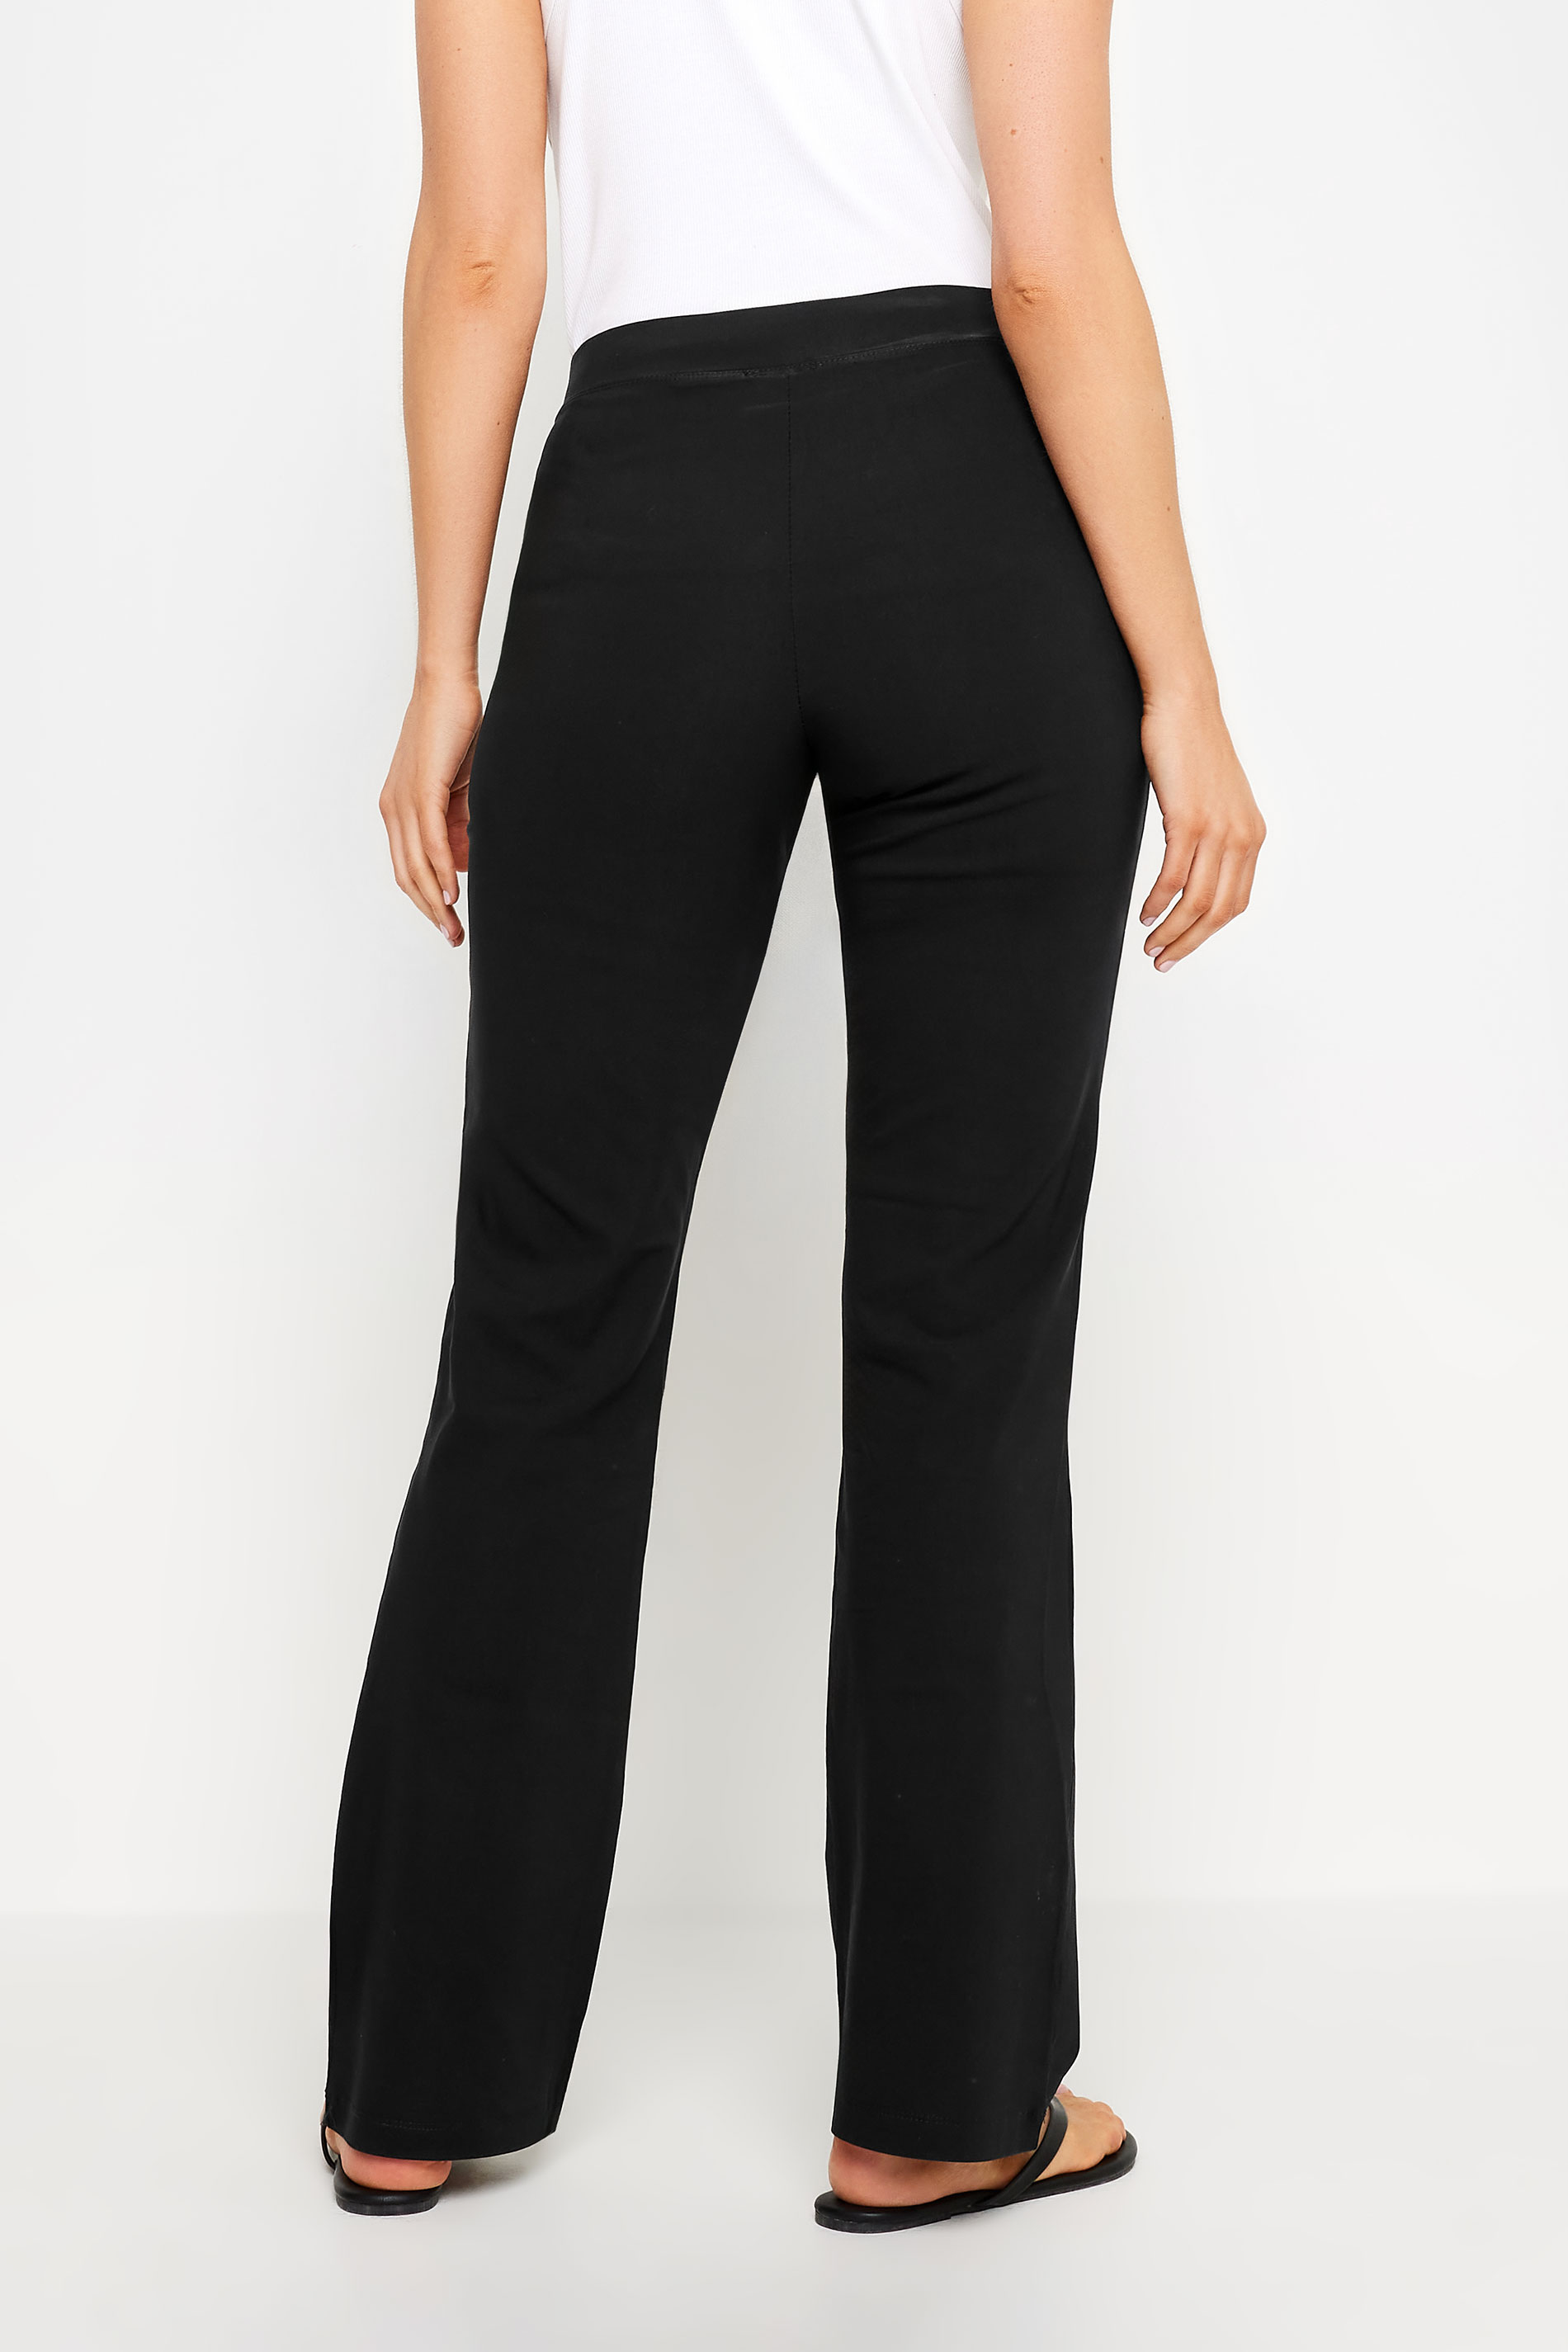 Tall Women's LTS Black Stretch Bootcut Trousers | Long Tall Sally 3